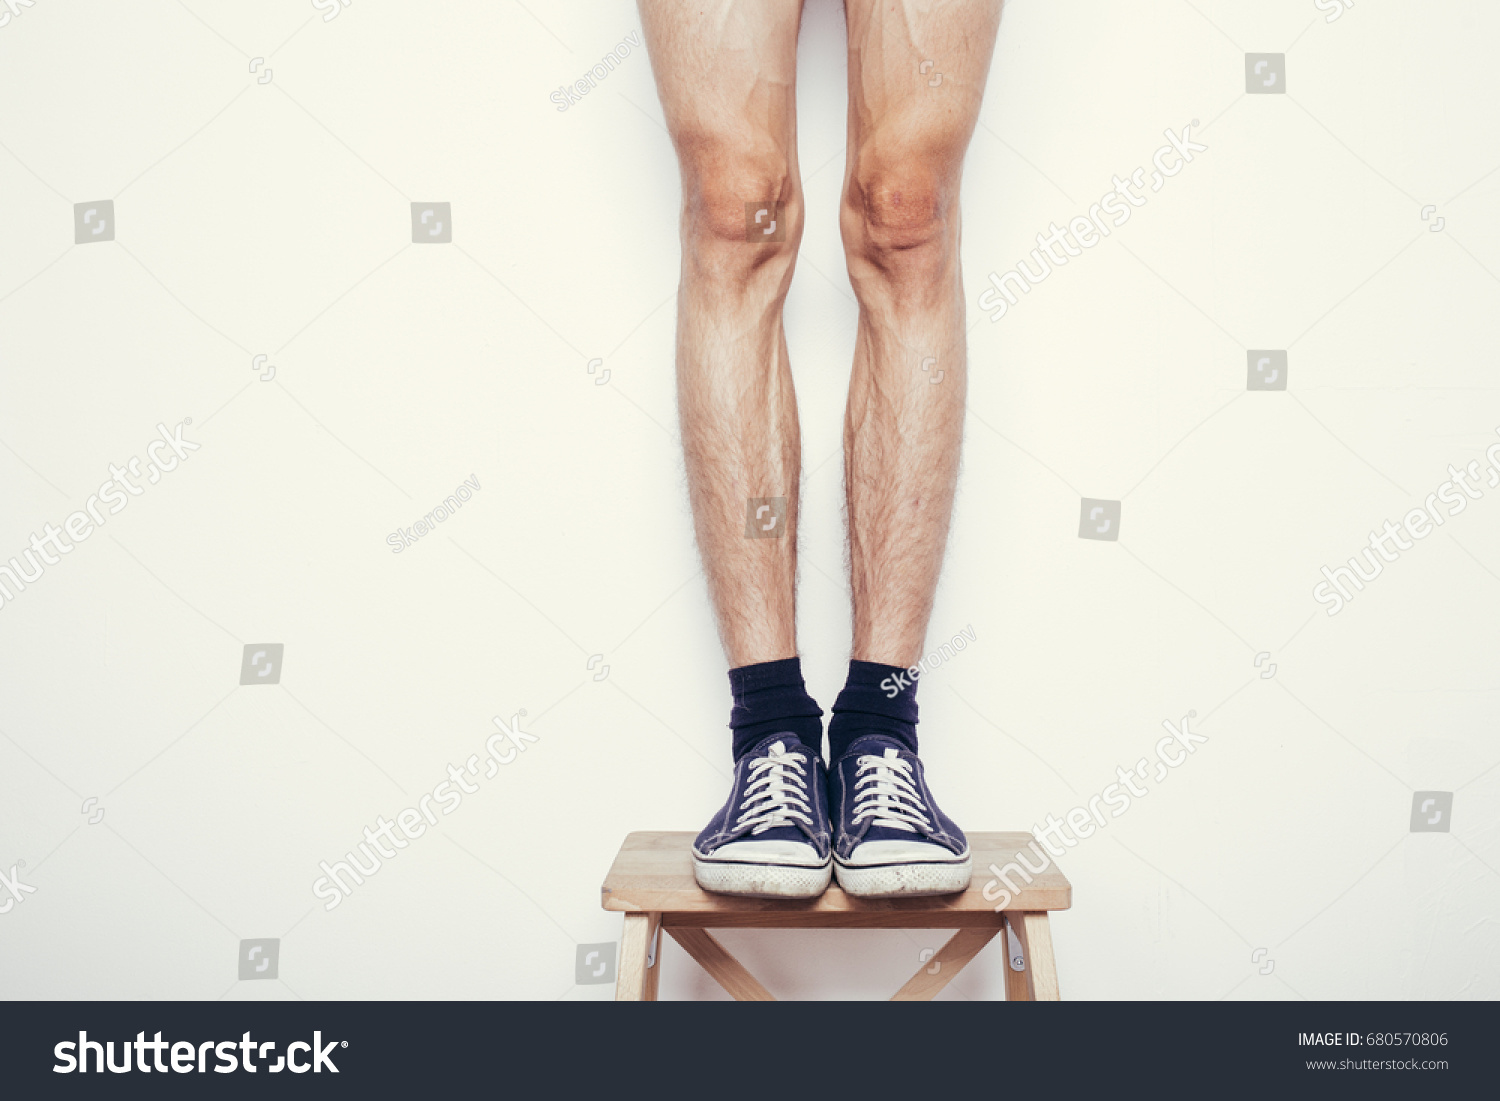 david nicoleta recommends pictures of skinny legs pic